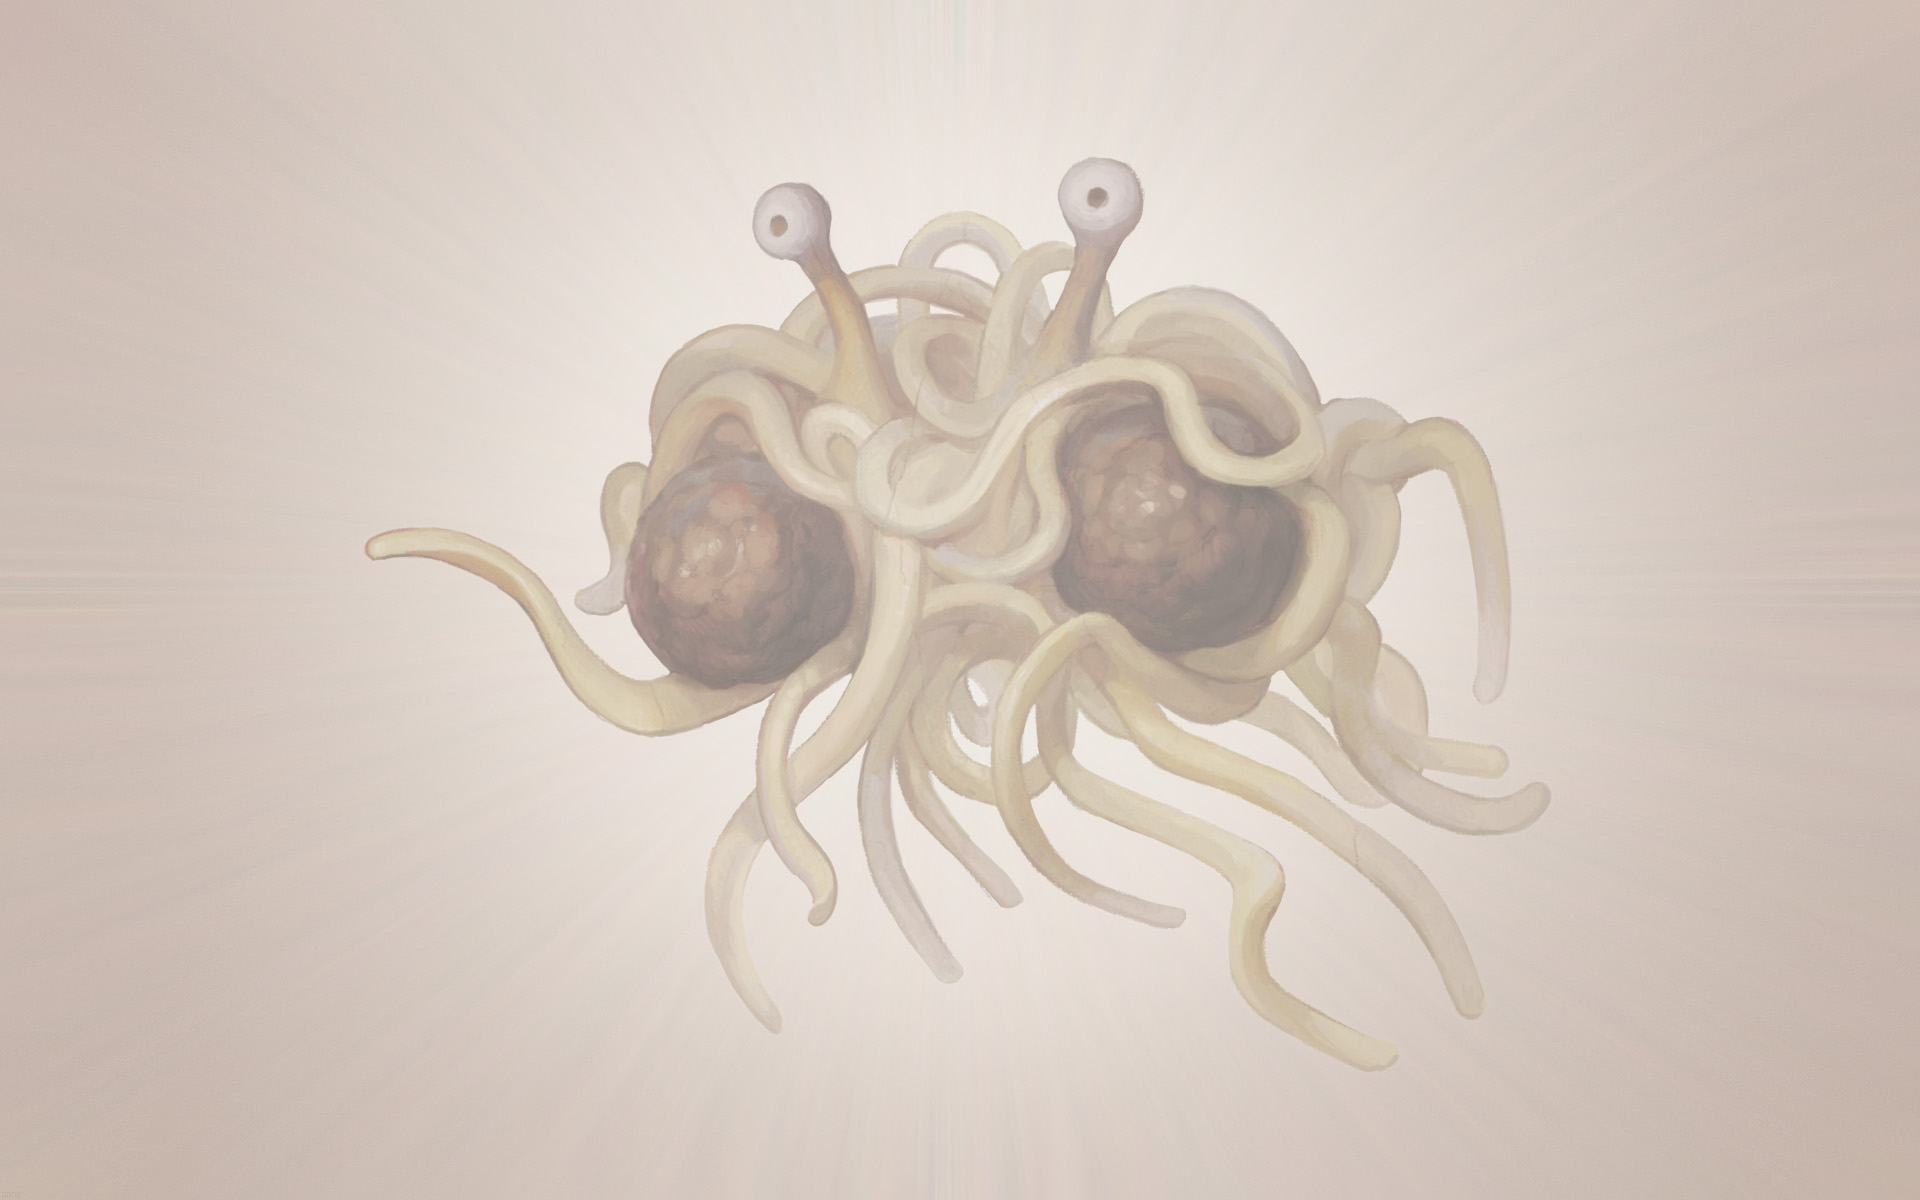 Flying Spaghetti Monster Prayer Submited Image